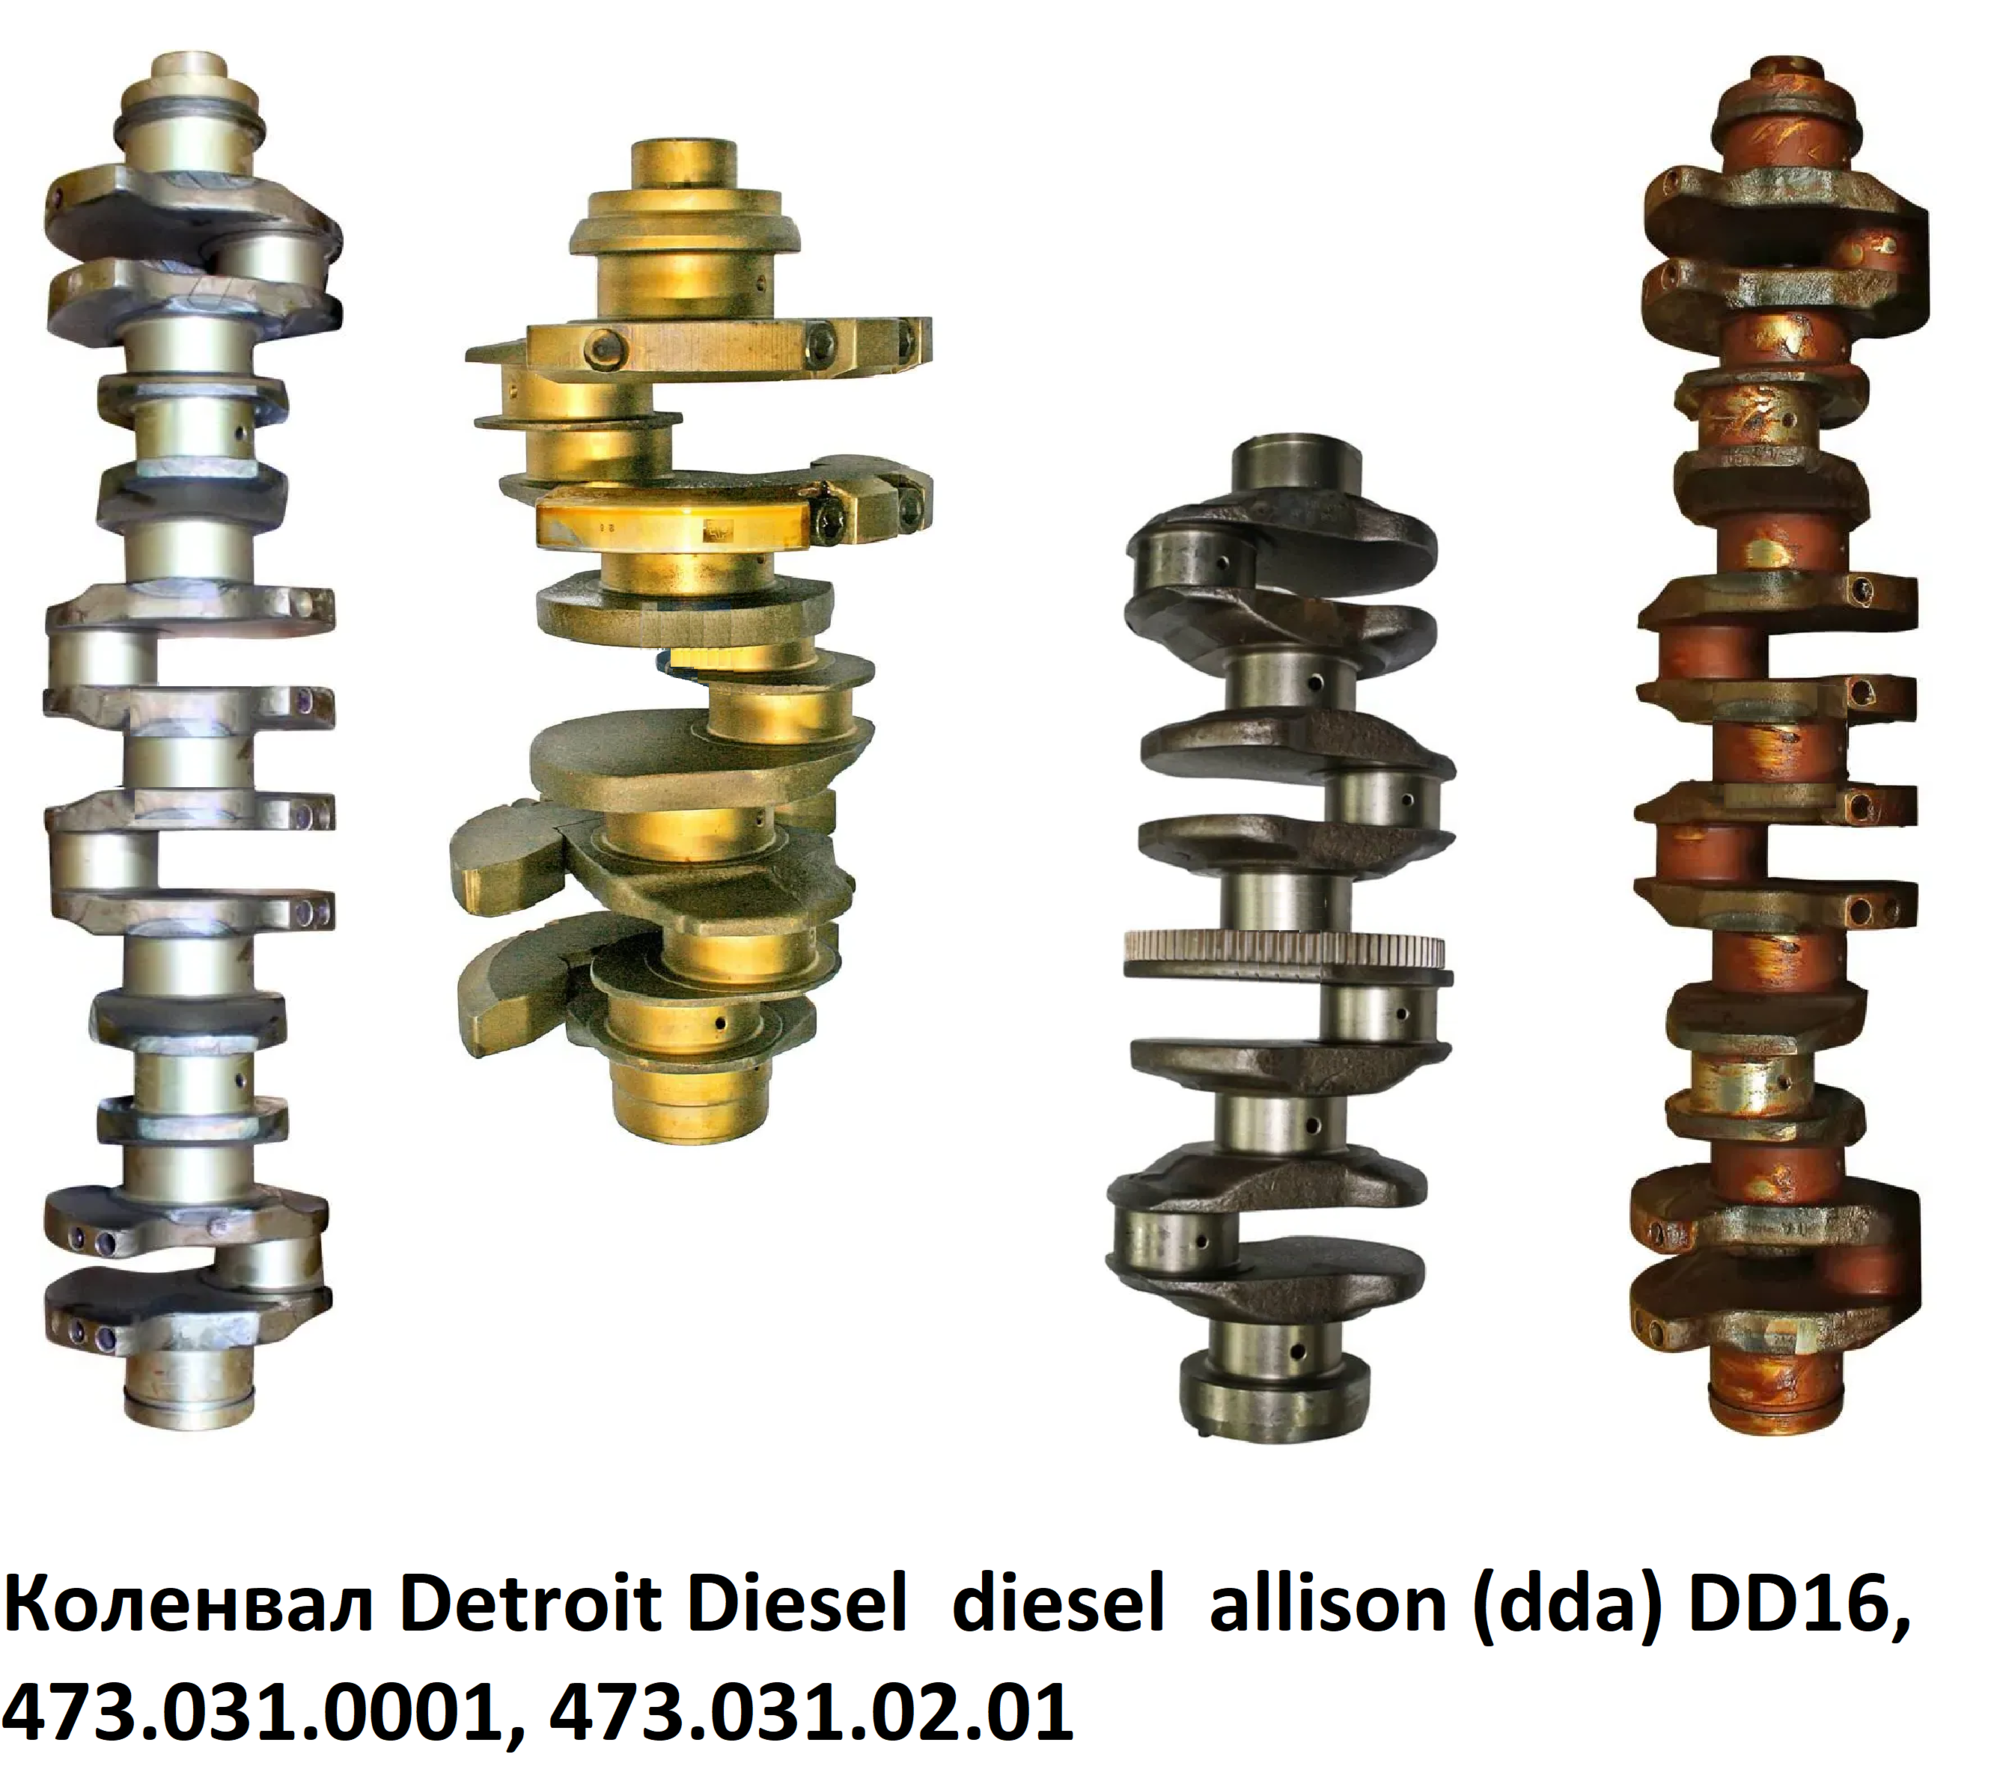 Коленвал Detroit Diesel diesel allison (dda) DD16, 473.031.0001, 473.031.02.01, 4730310001, 4730310201